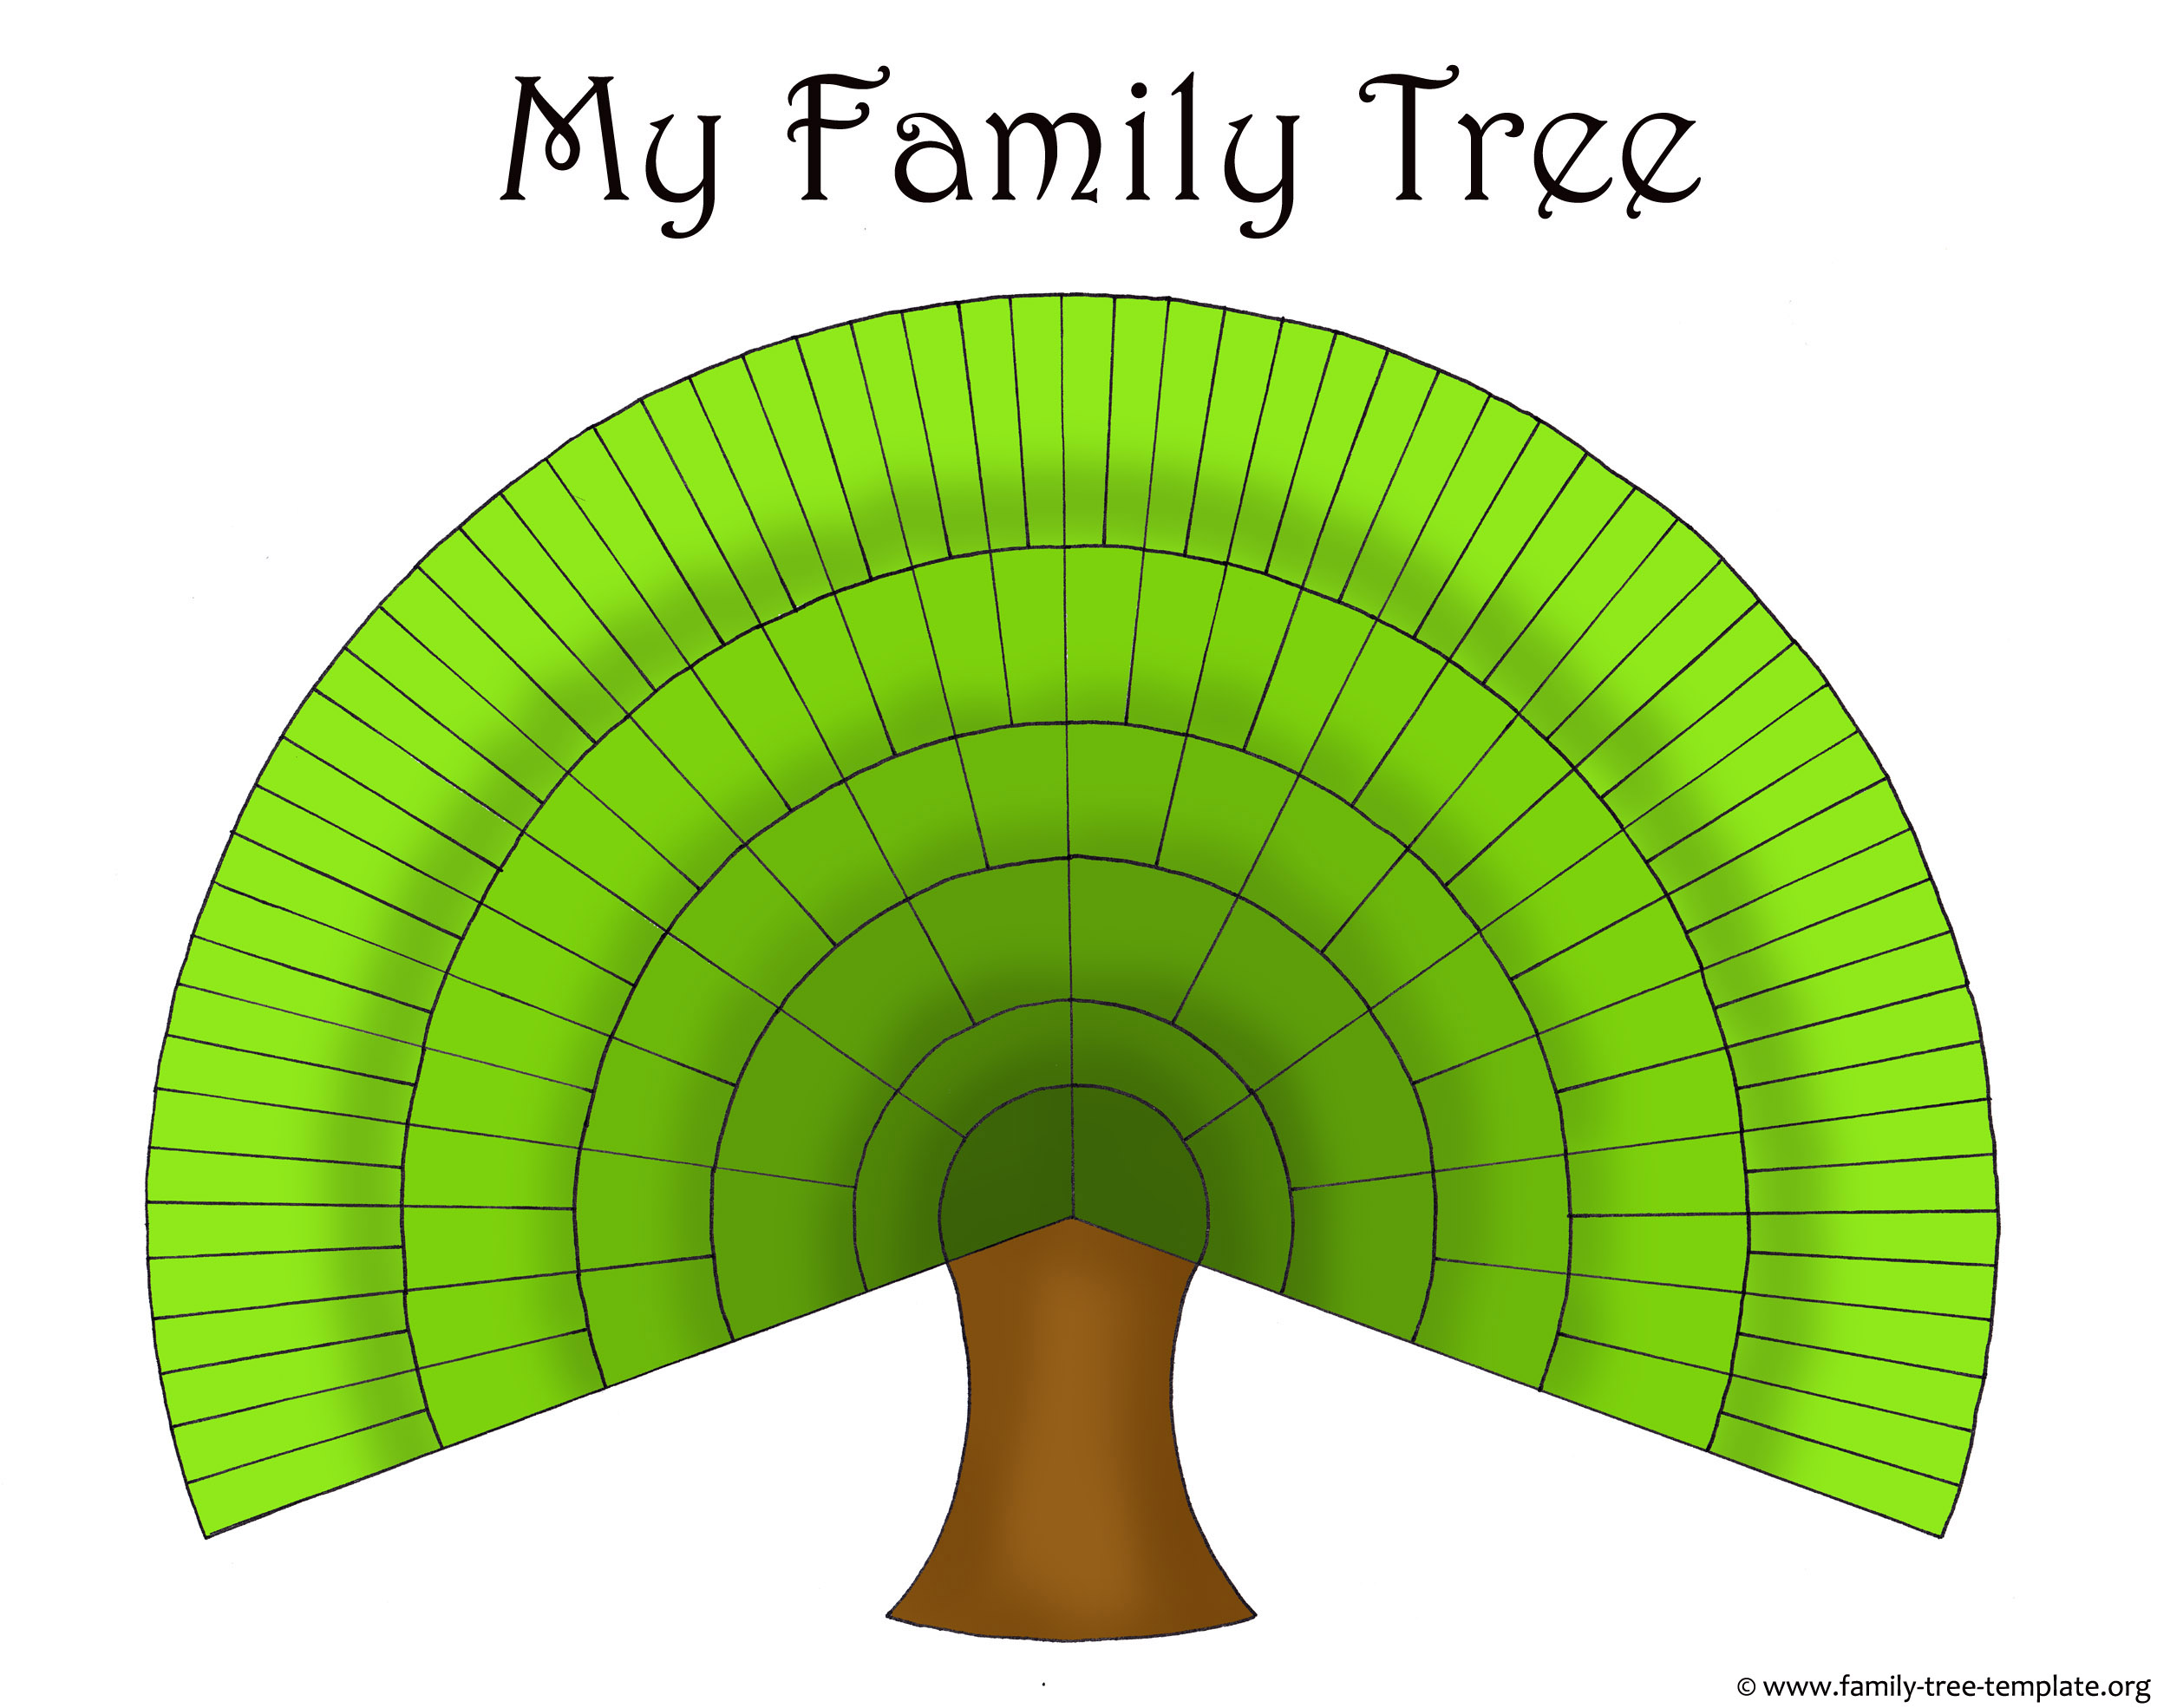 clipart of a family tree - photo #19